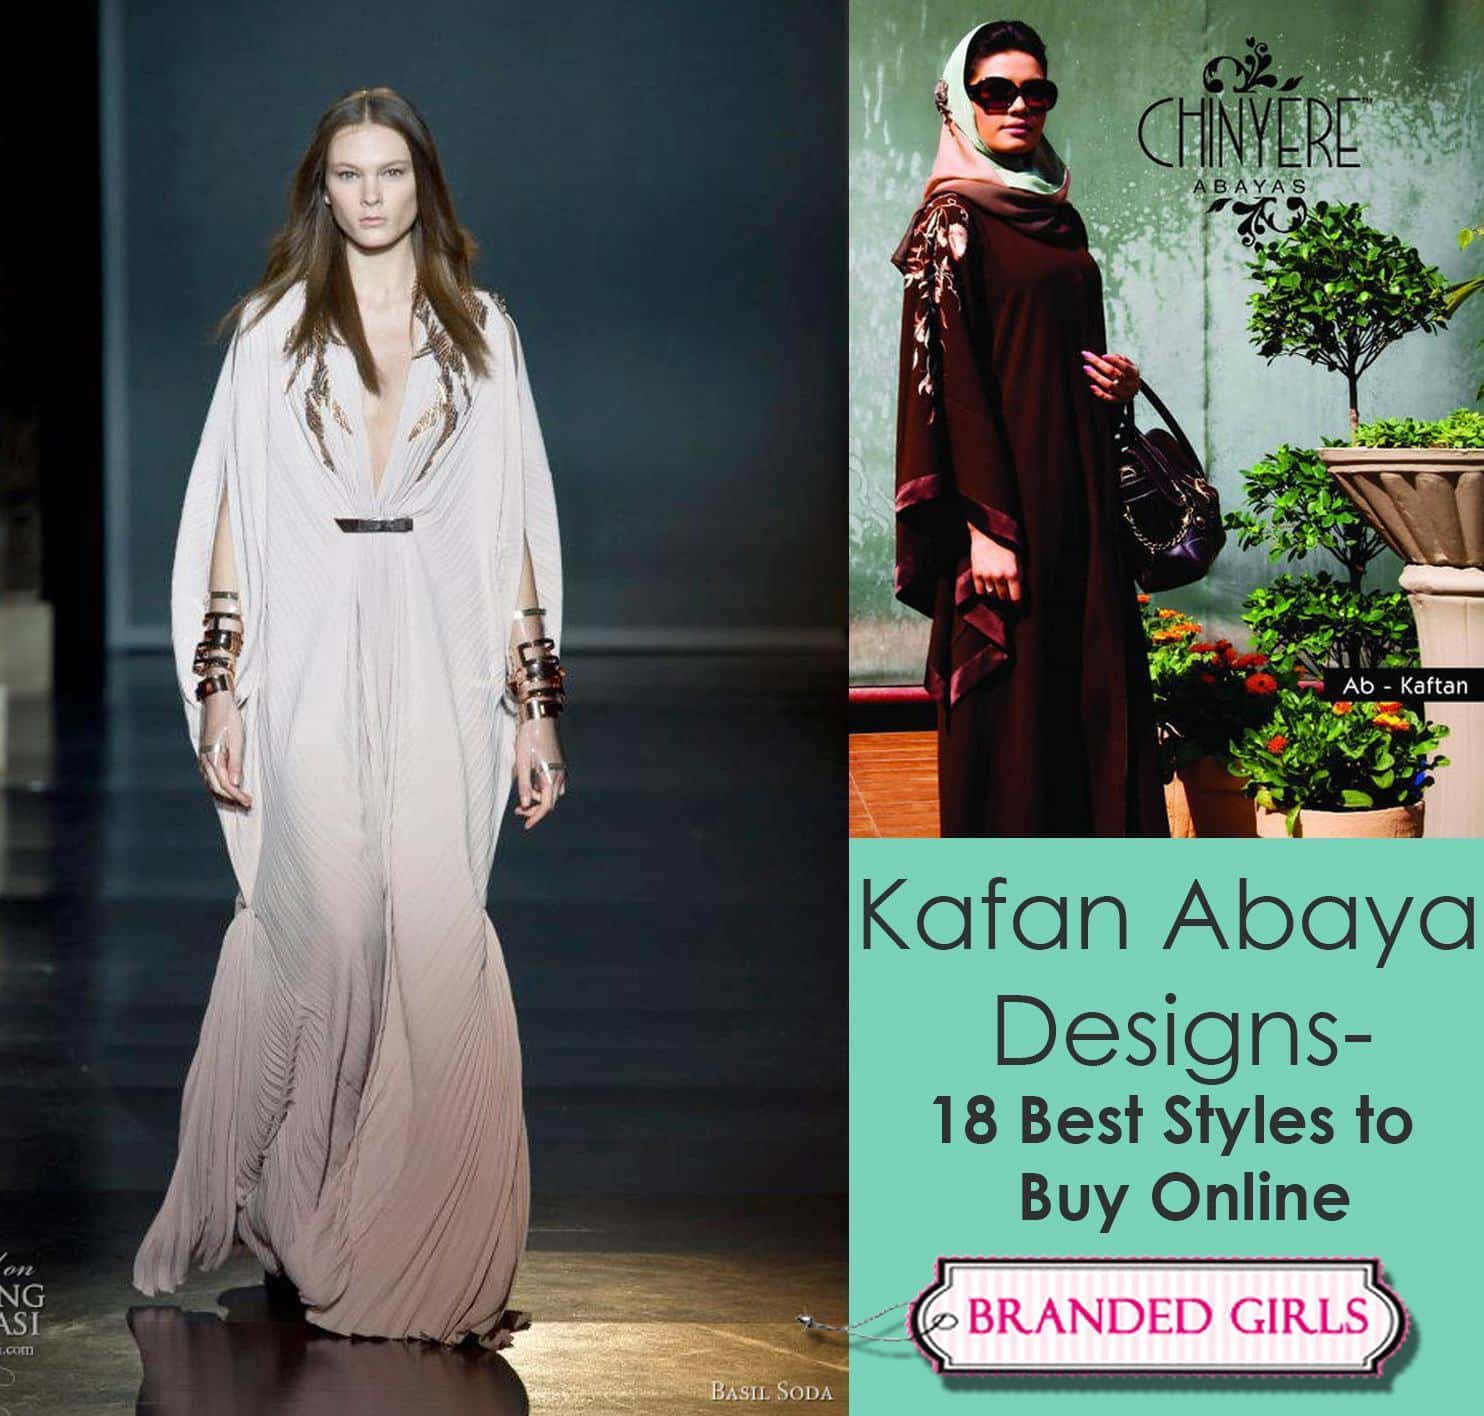 Kaftan Abaya Designs - 18 Latest Styles to Buy Online Now